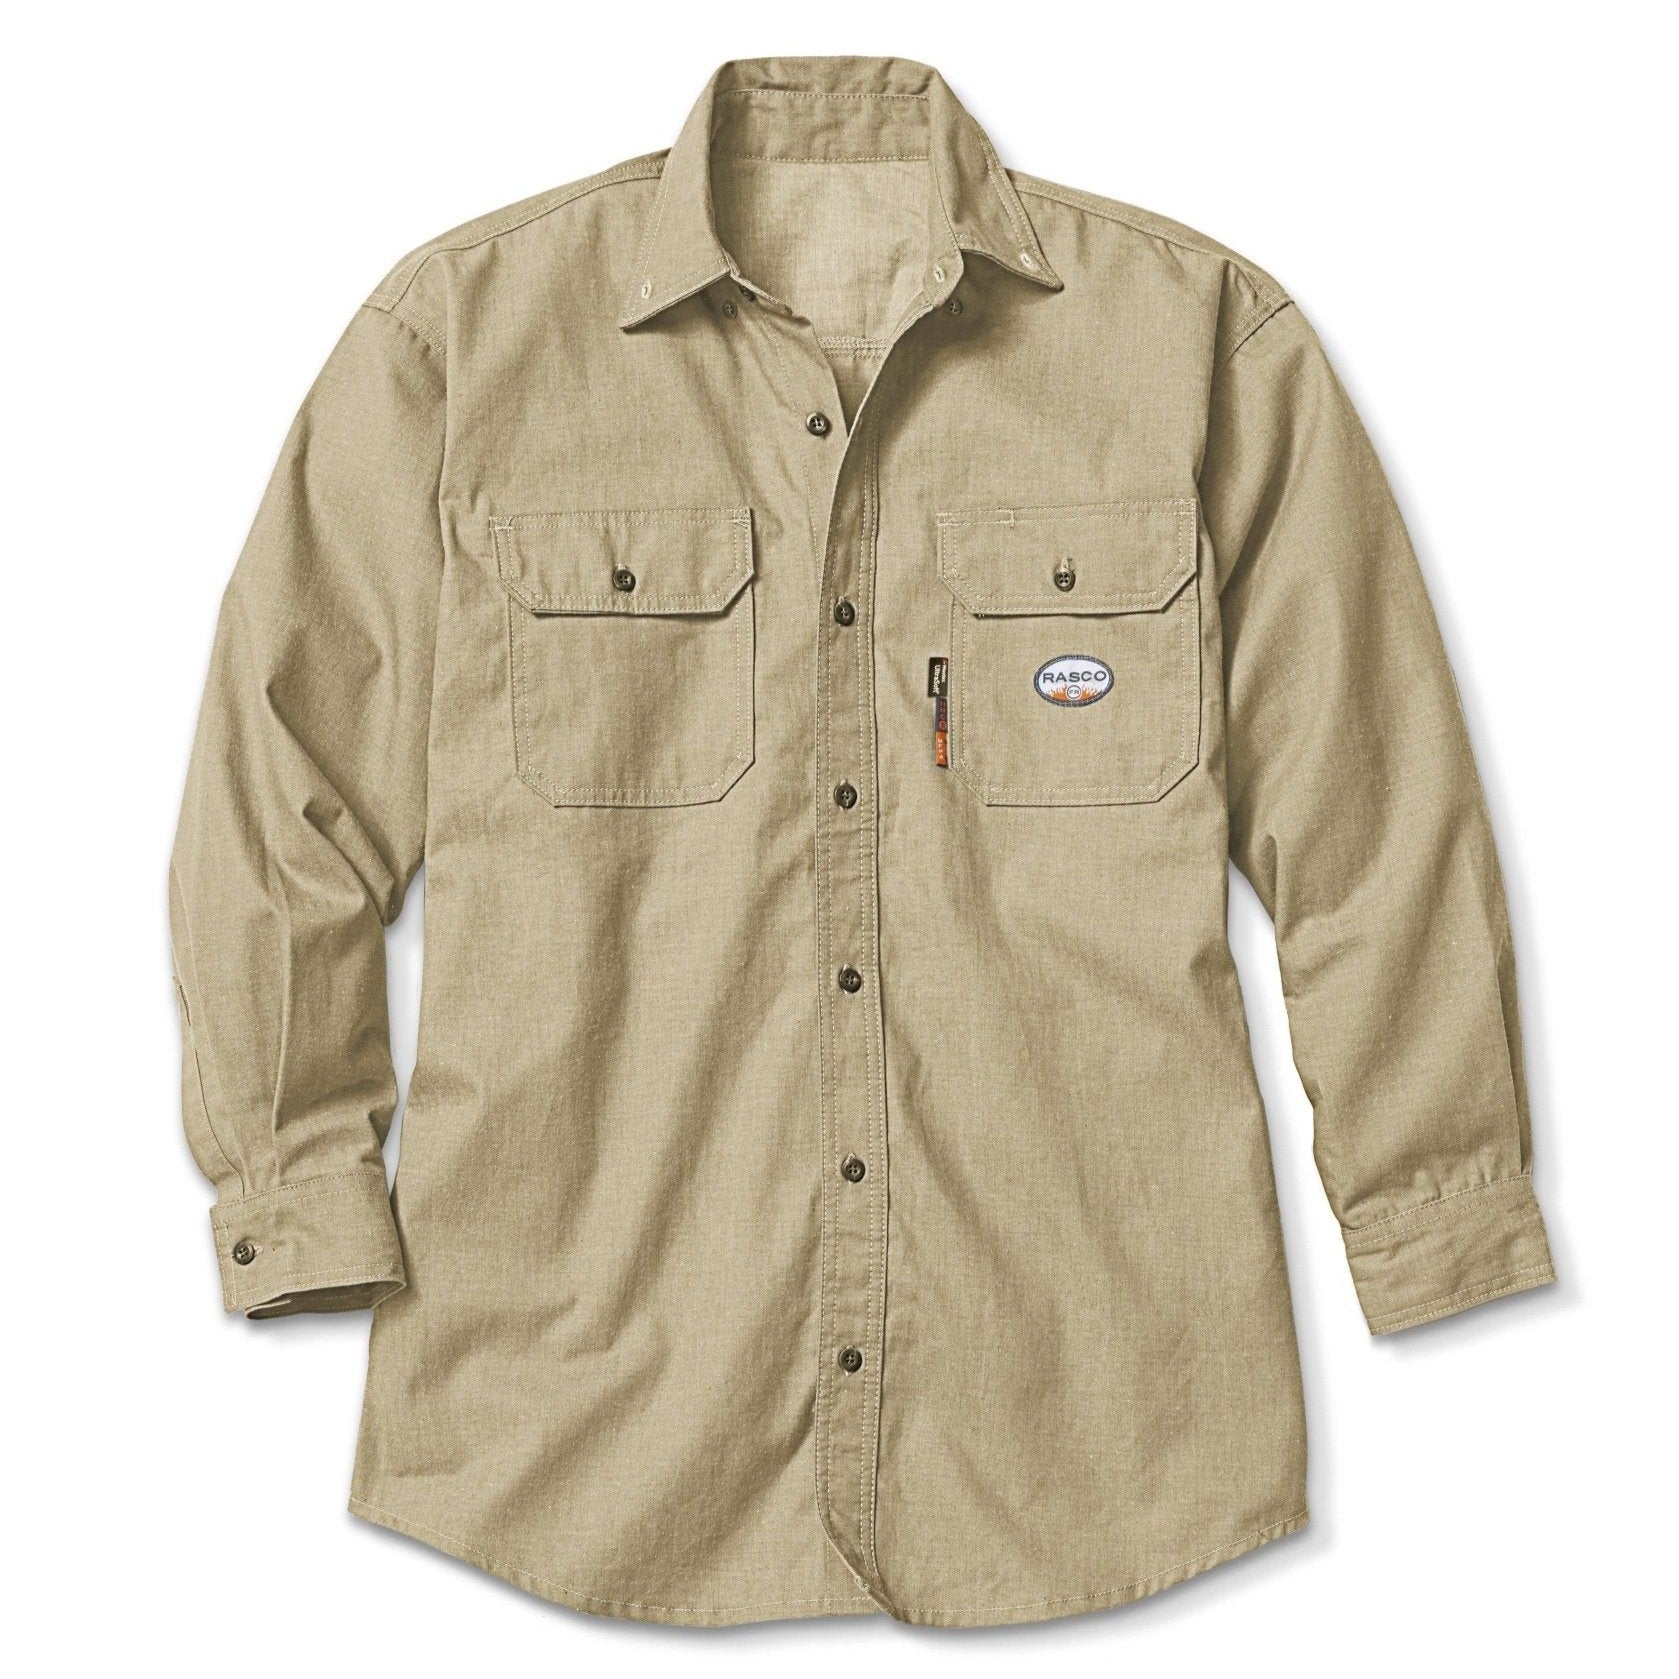 FR 88/12 Men's Uniform Shirt - Khaki - Rasco FR